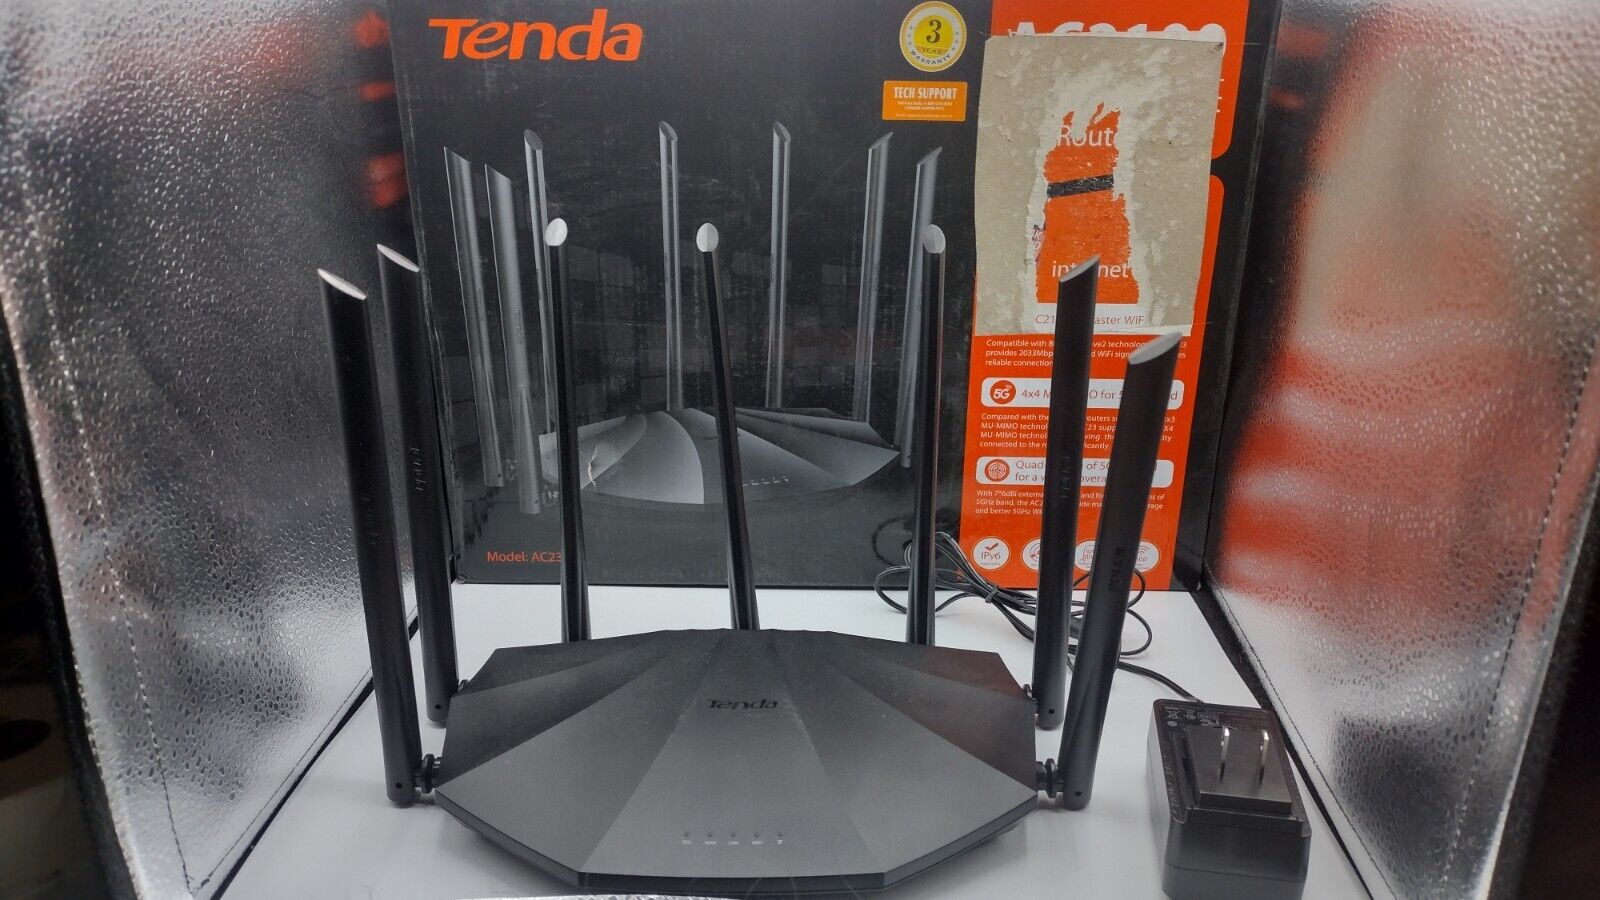 Tenda 246349 Network Ac23 Ac2100 Dual Band Gigabit Wifi Router 5ghz 2.4ghz